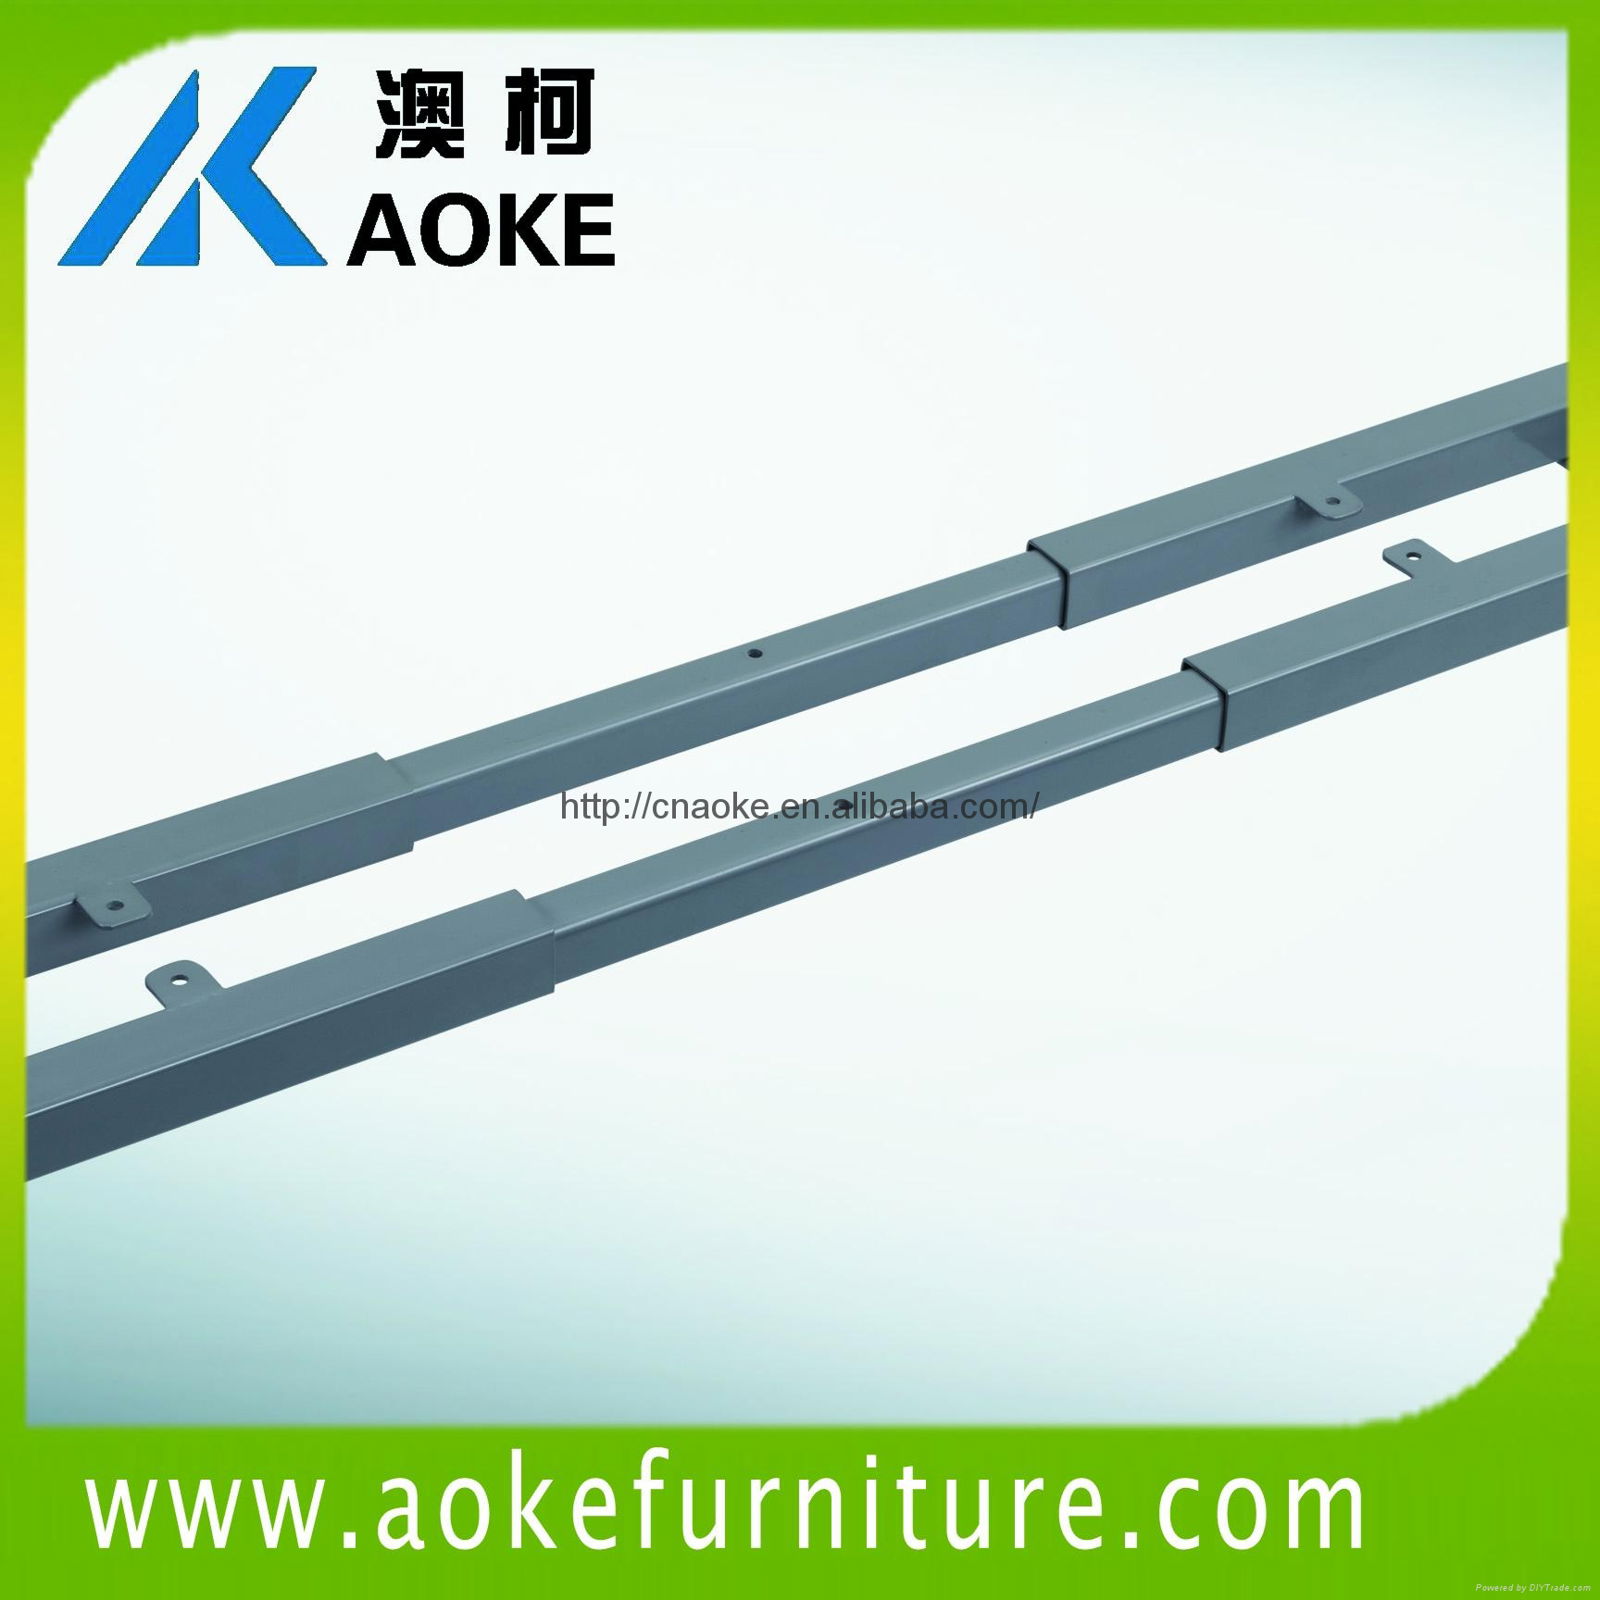 AOKE AK2RT-RS2 electric adjustable standing desk 3